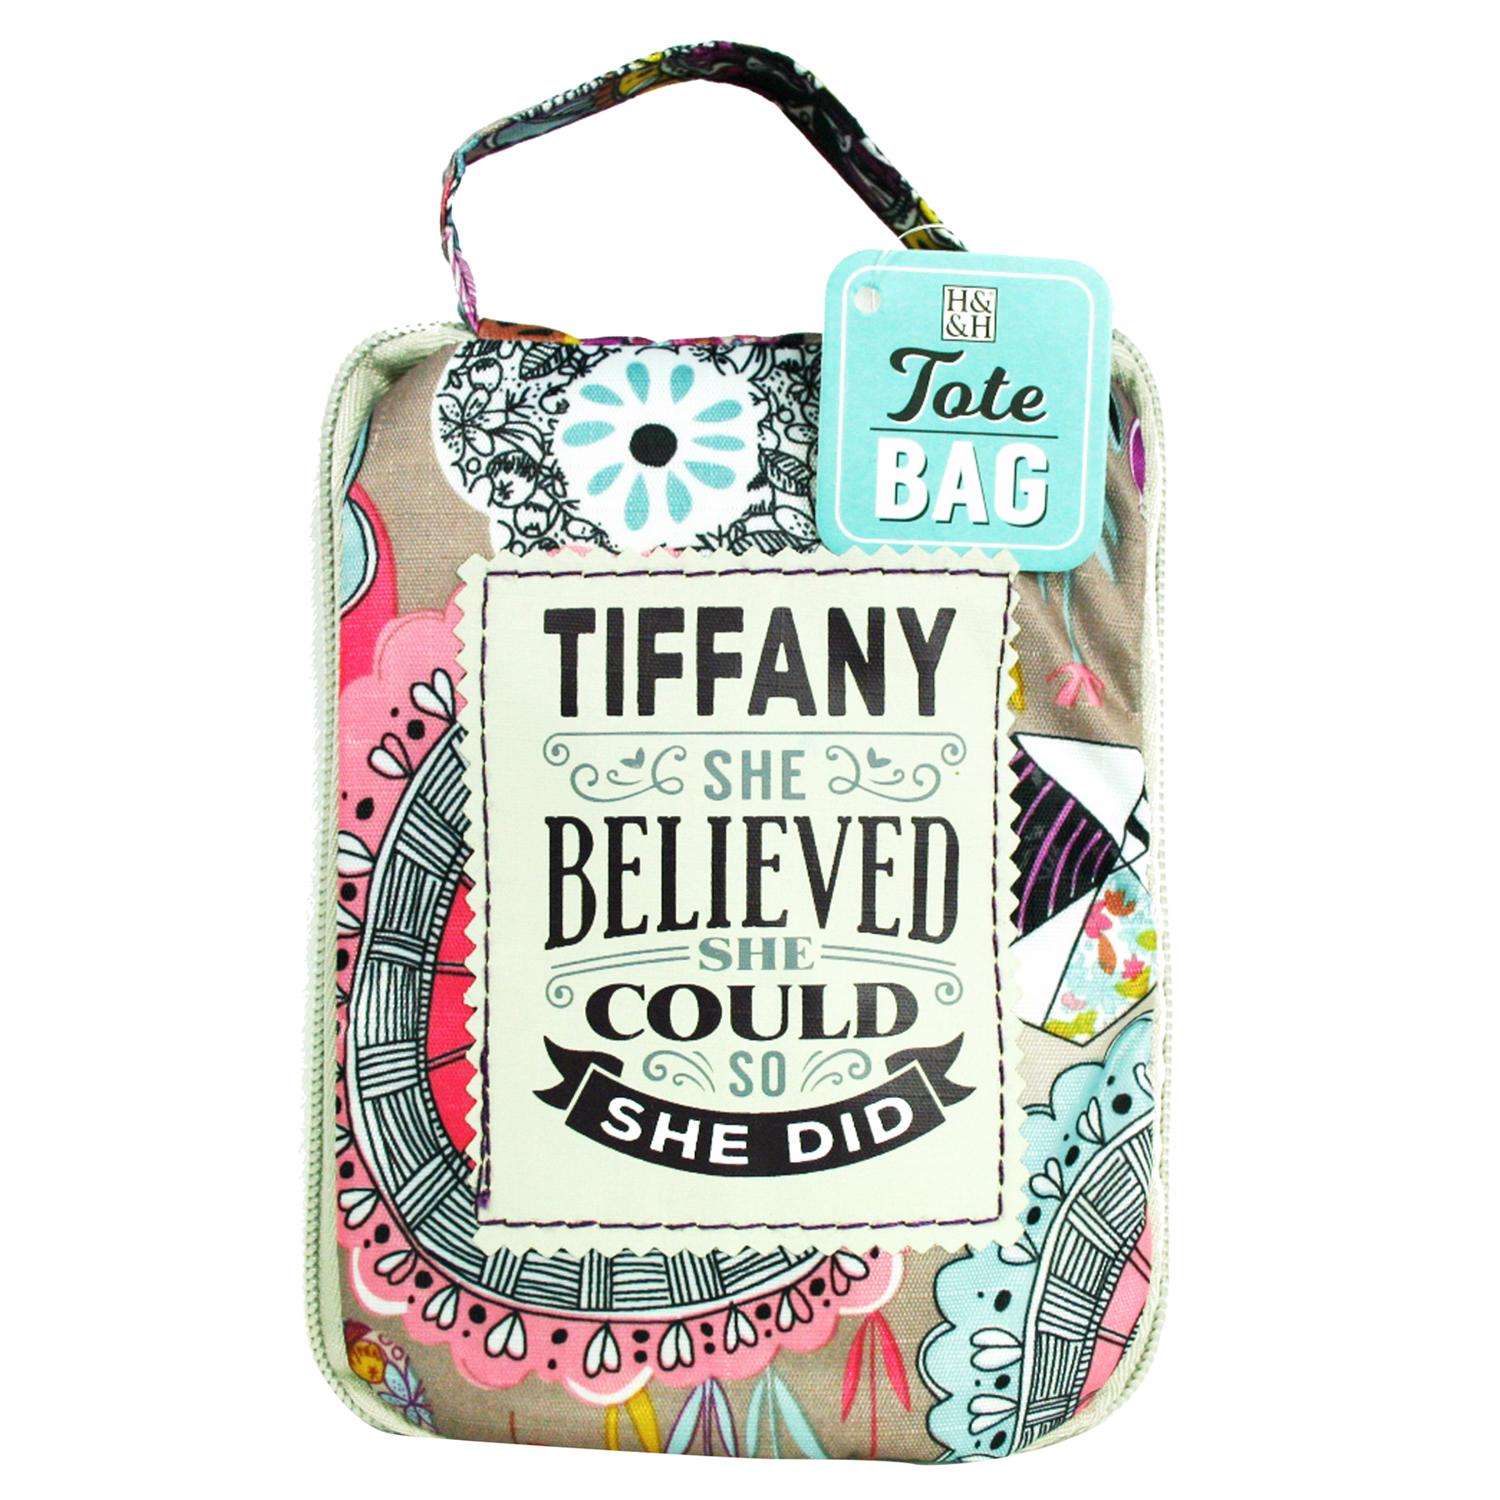 Tiffany Magnolia Tote Bag